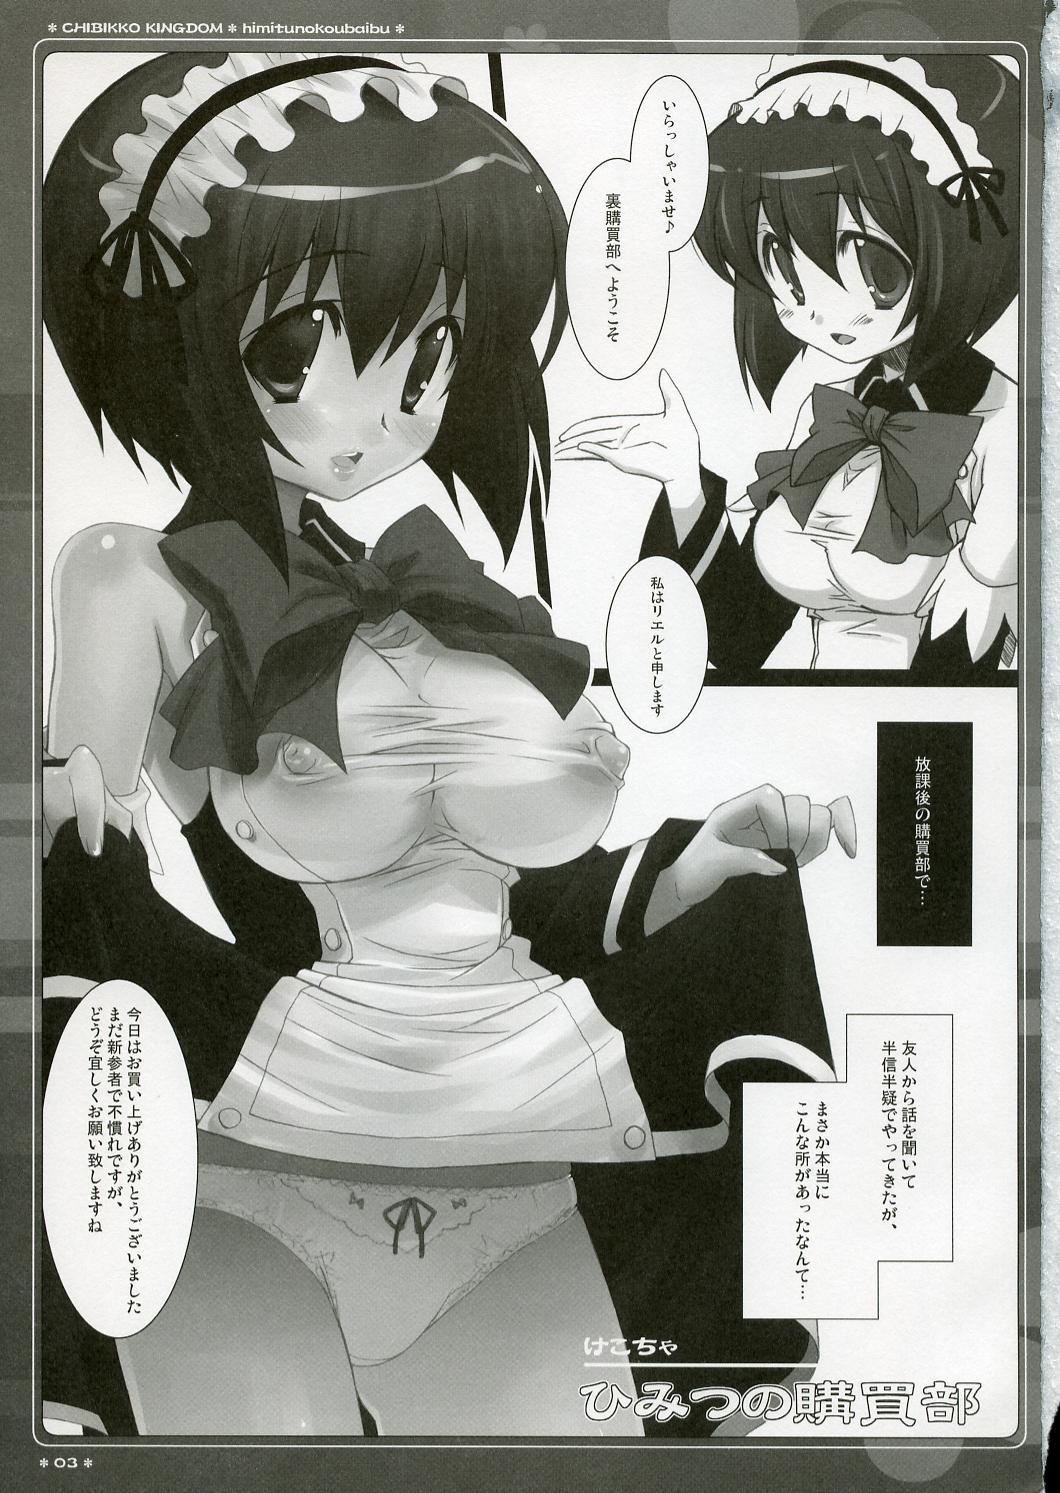 Girl Himitsu no Koubaibu - Quiz magic academy Italiano - Page 2